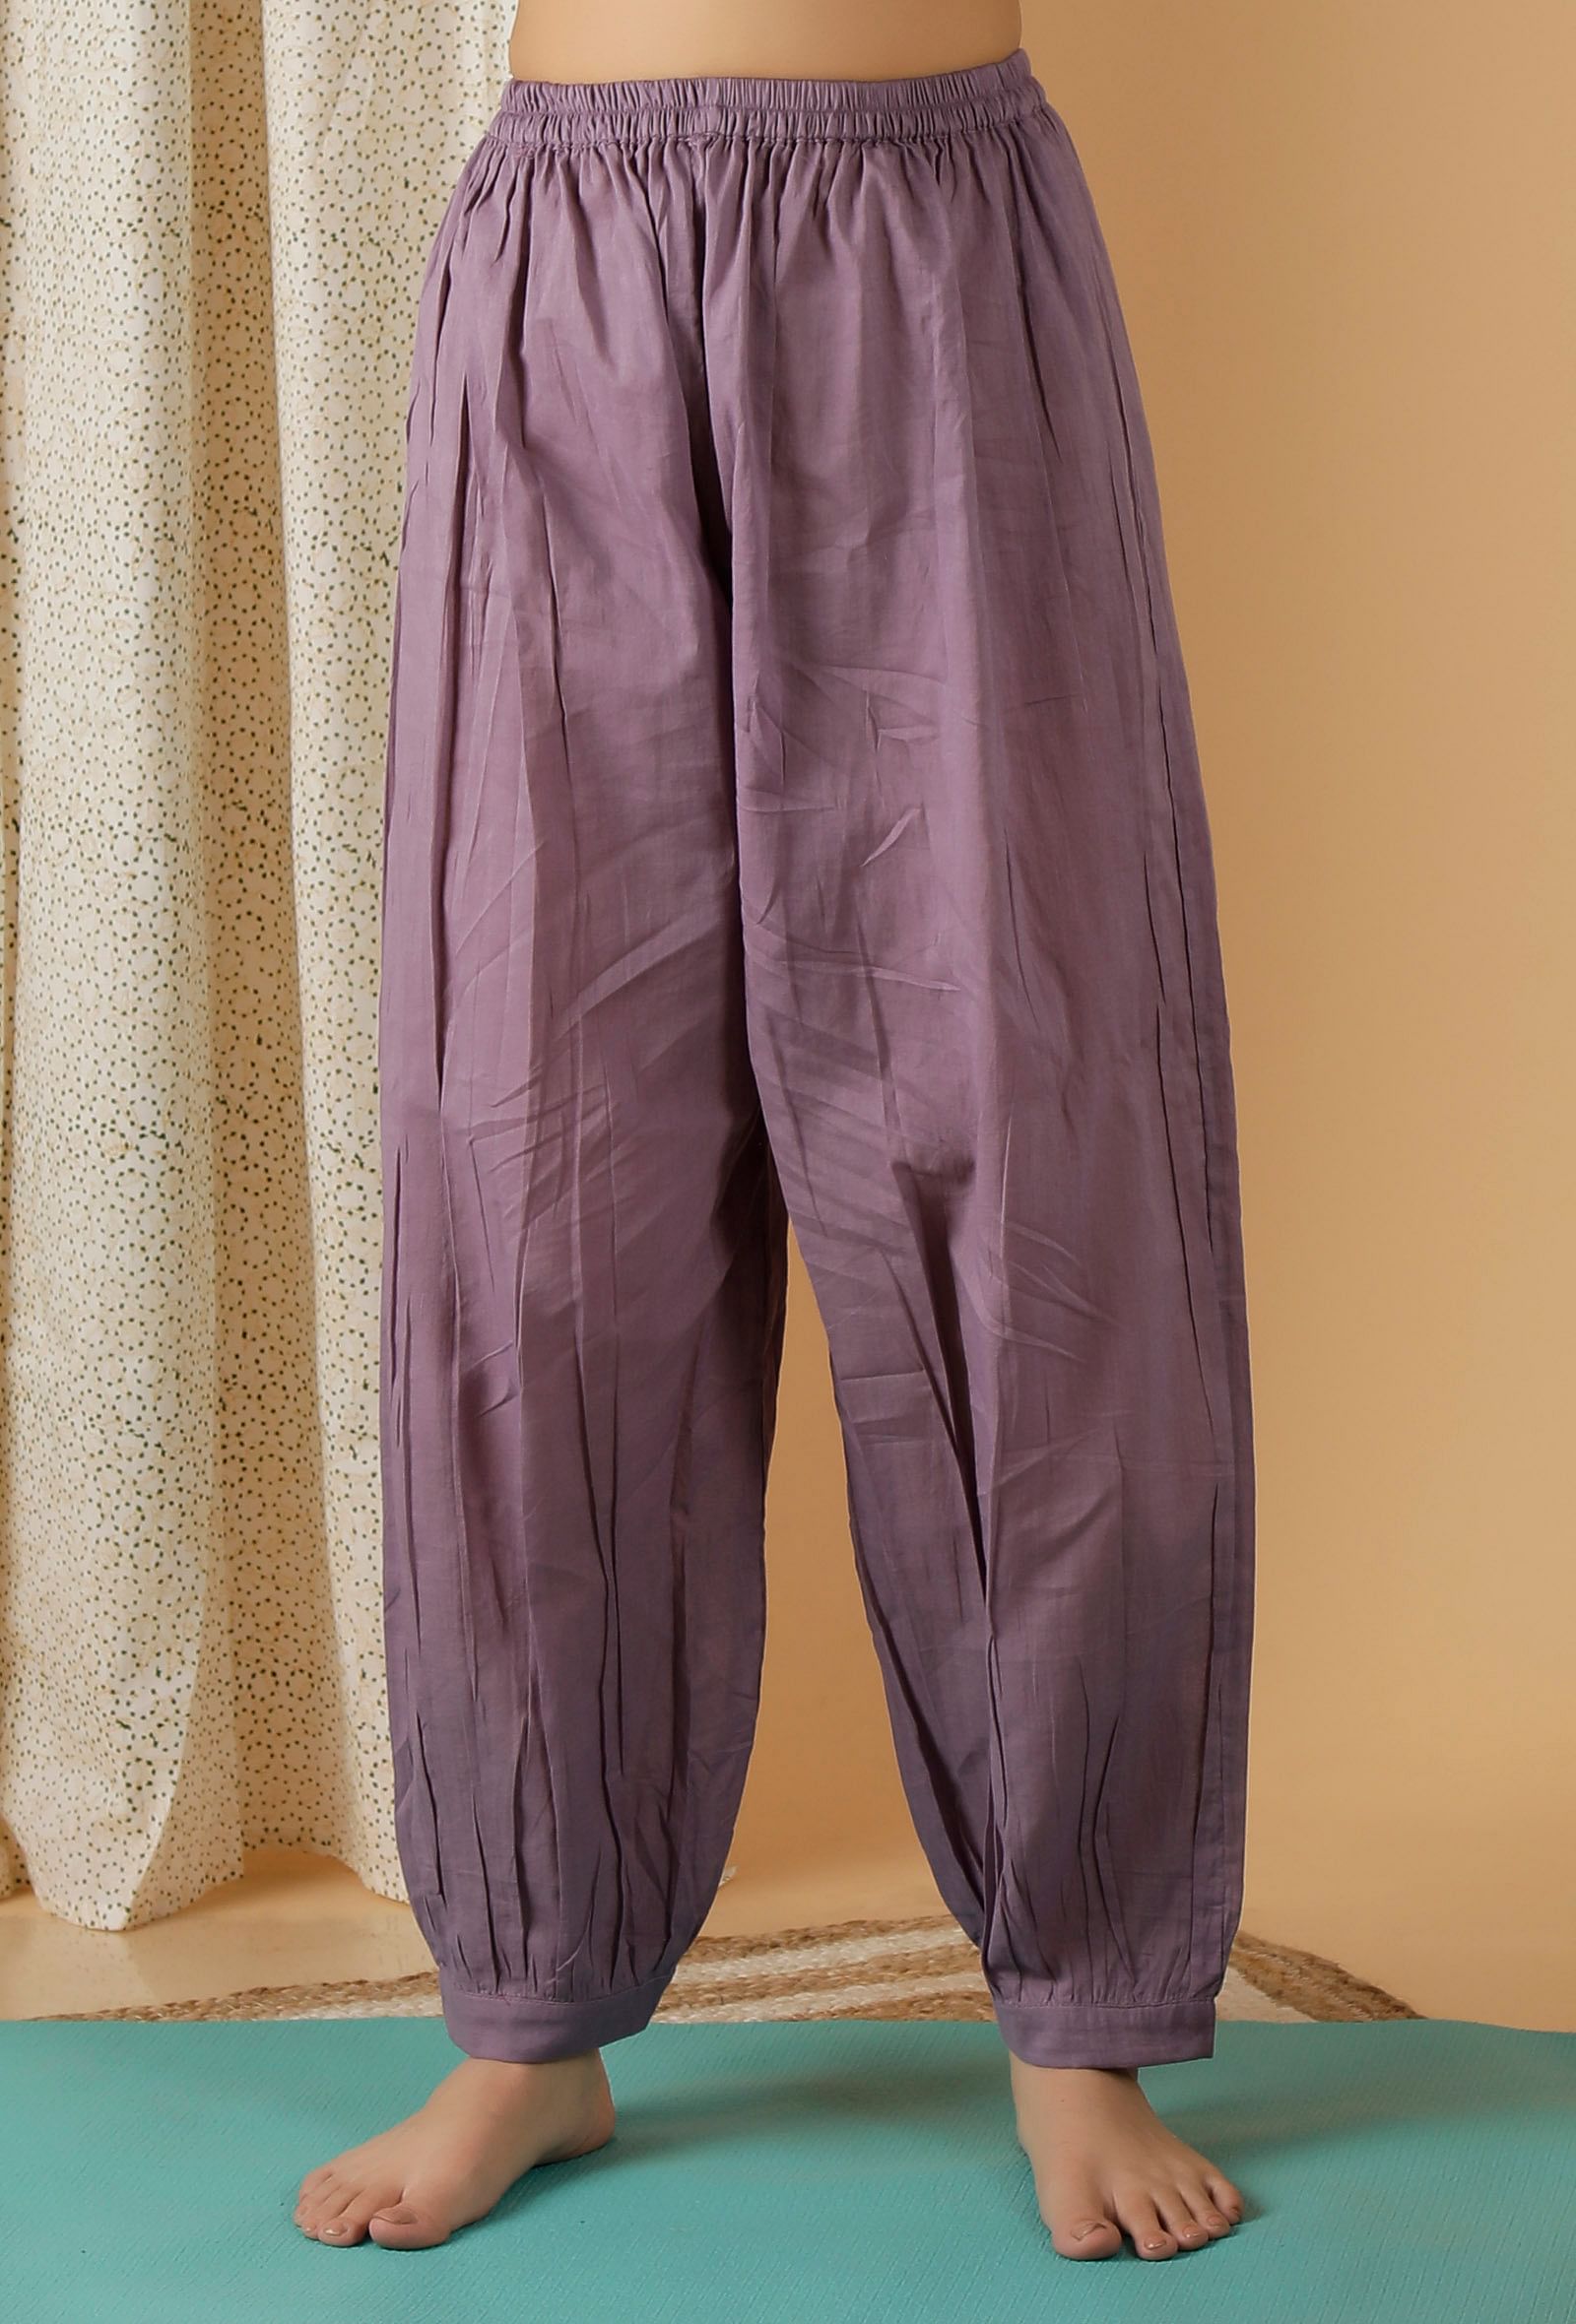 Set Of 2: Mulmul Cotton Lilac Kurta And Harem Pant Yoga Set